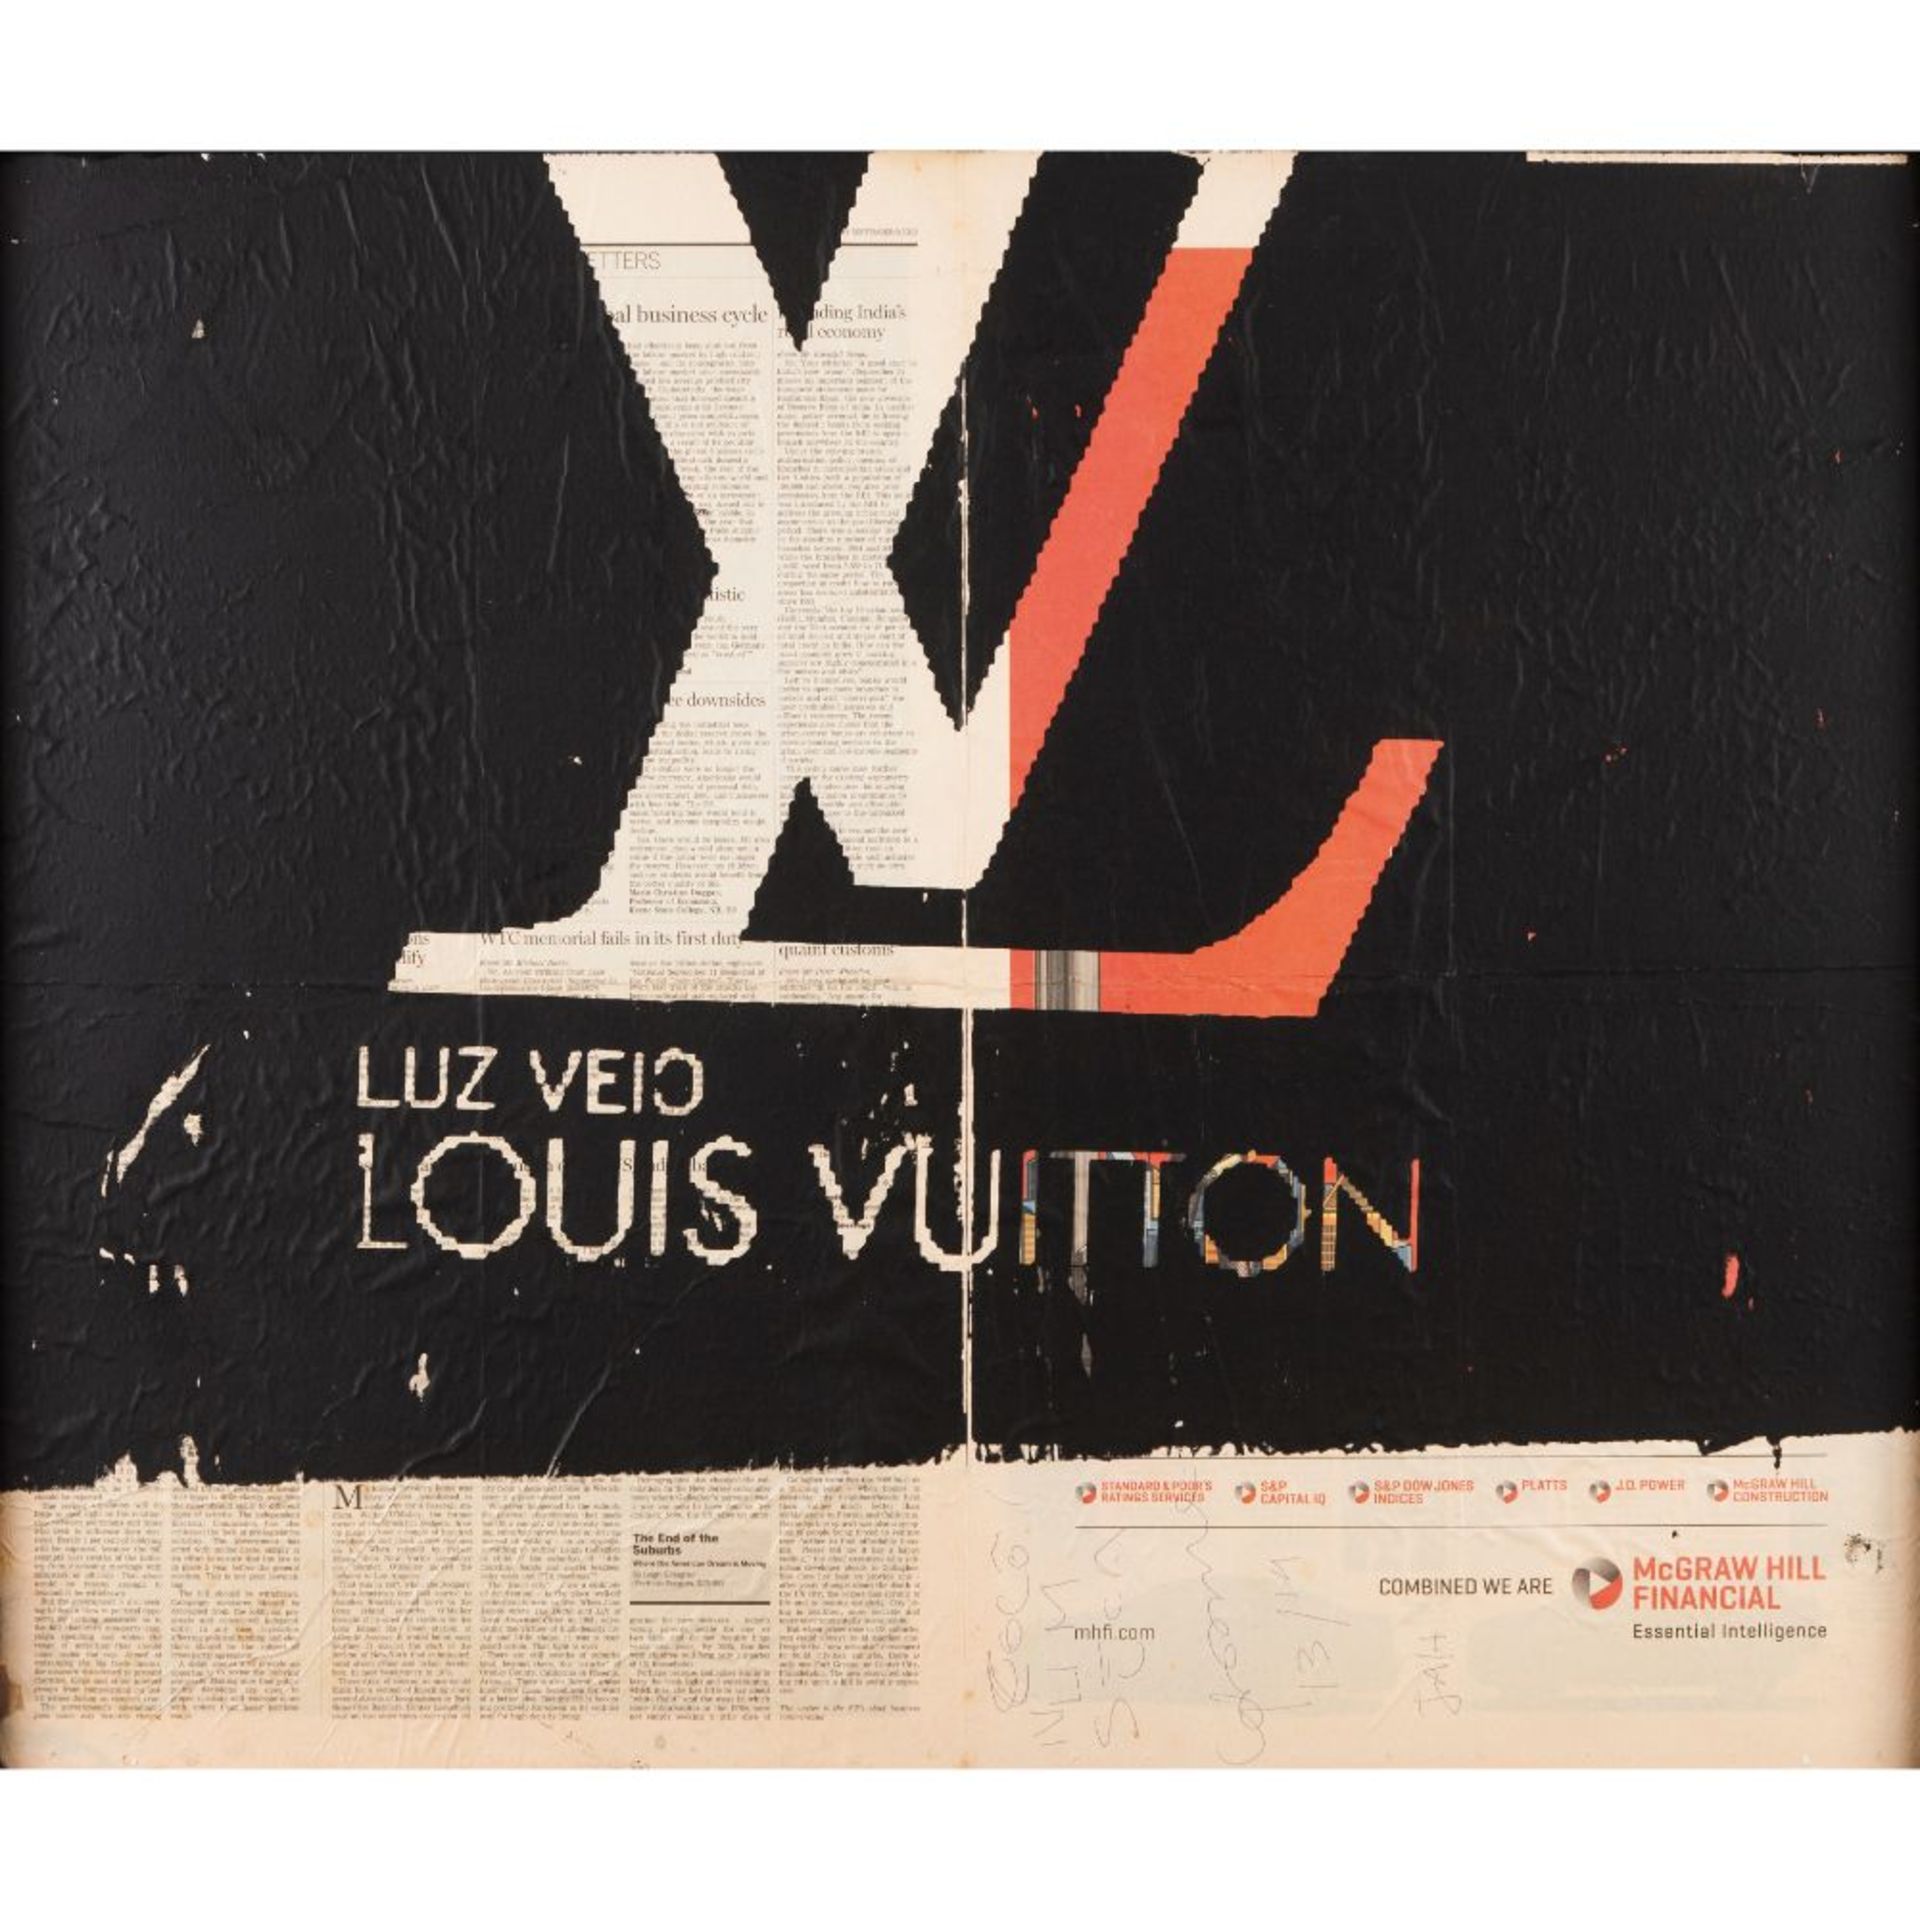 Yonamine (b. 1975)"Louis Vuitton/Luiz Veio"